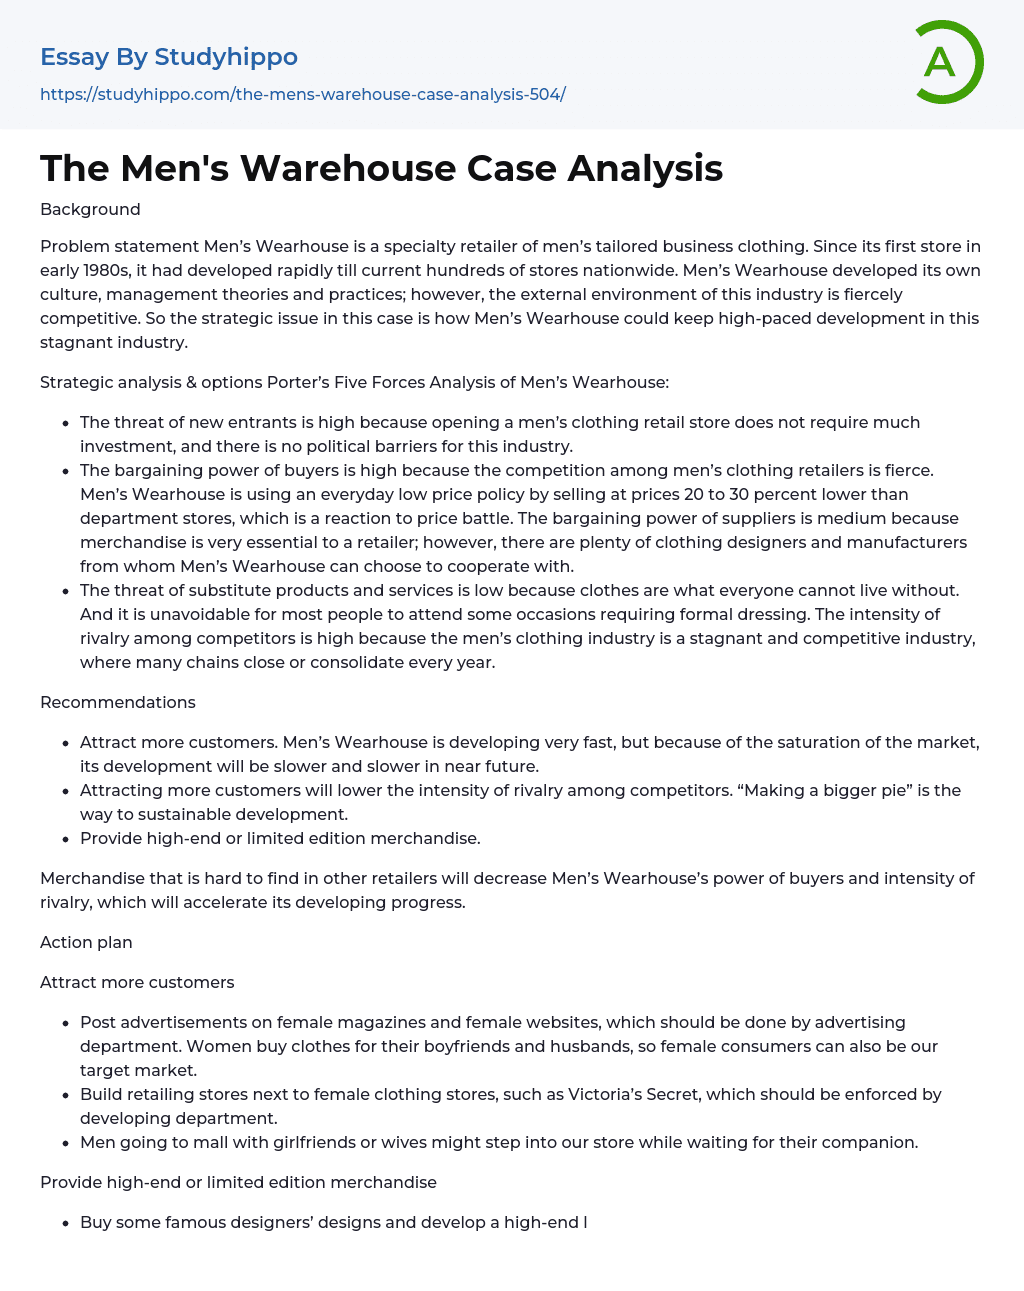 The Men’s Warehouse Case Analysis Essay Example